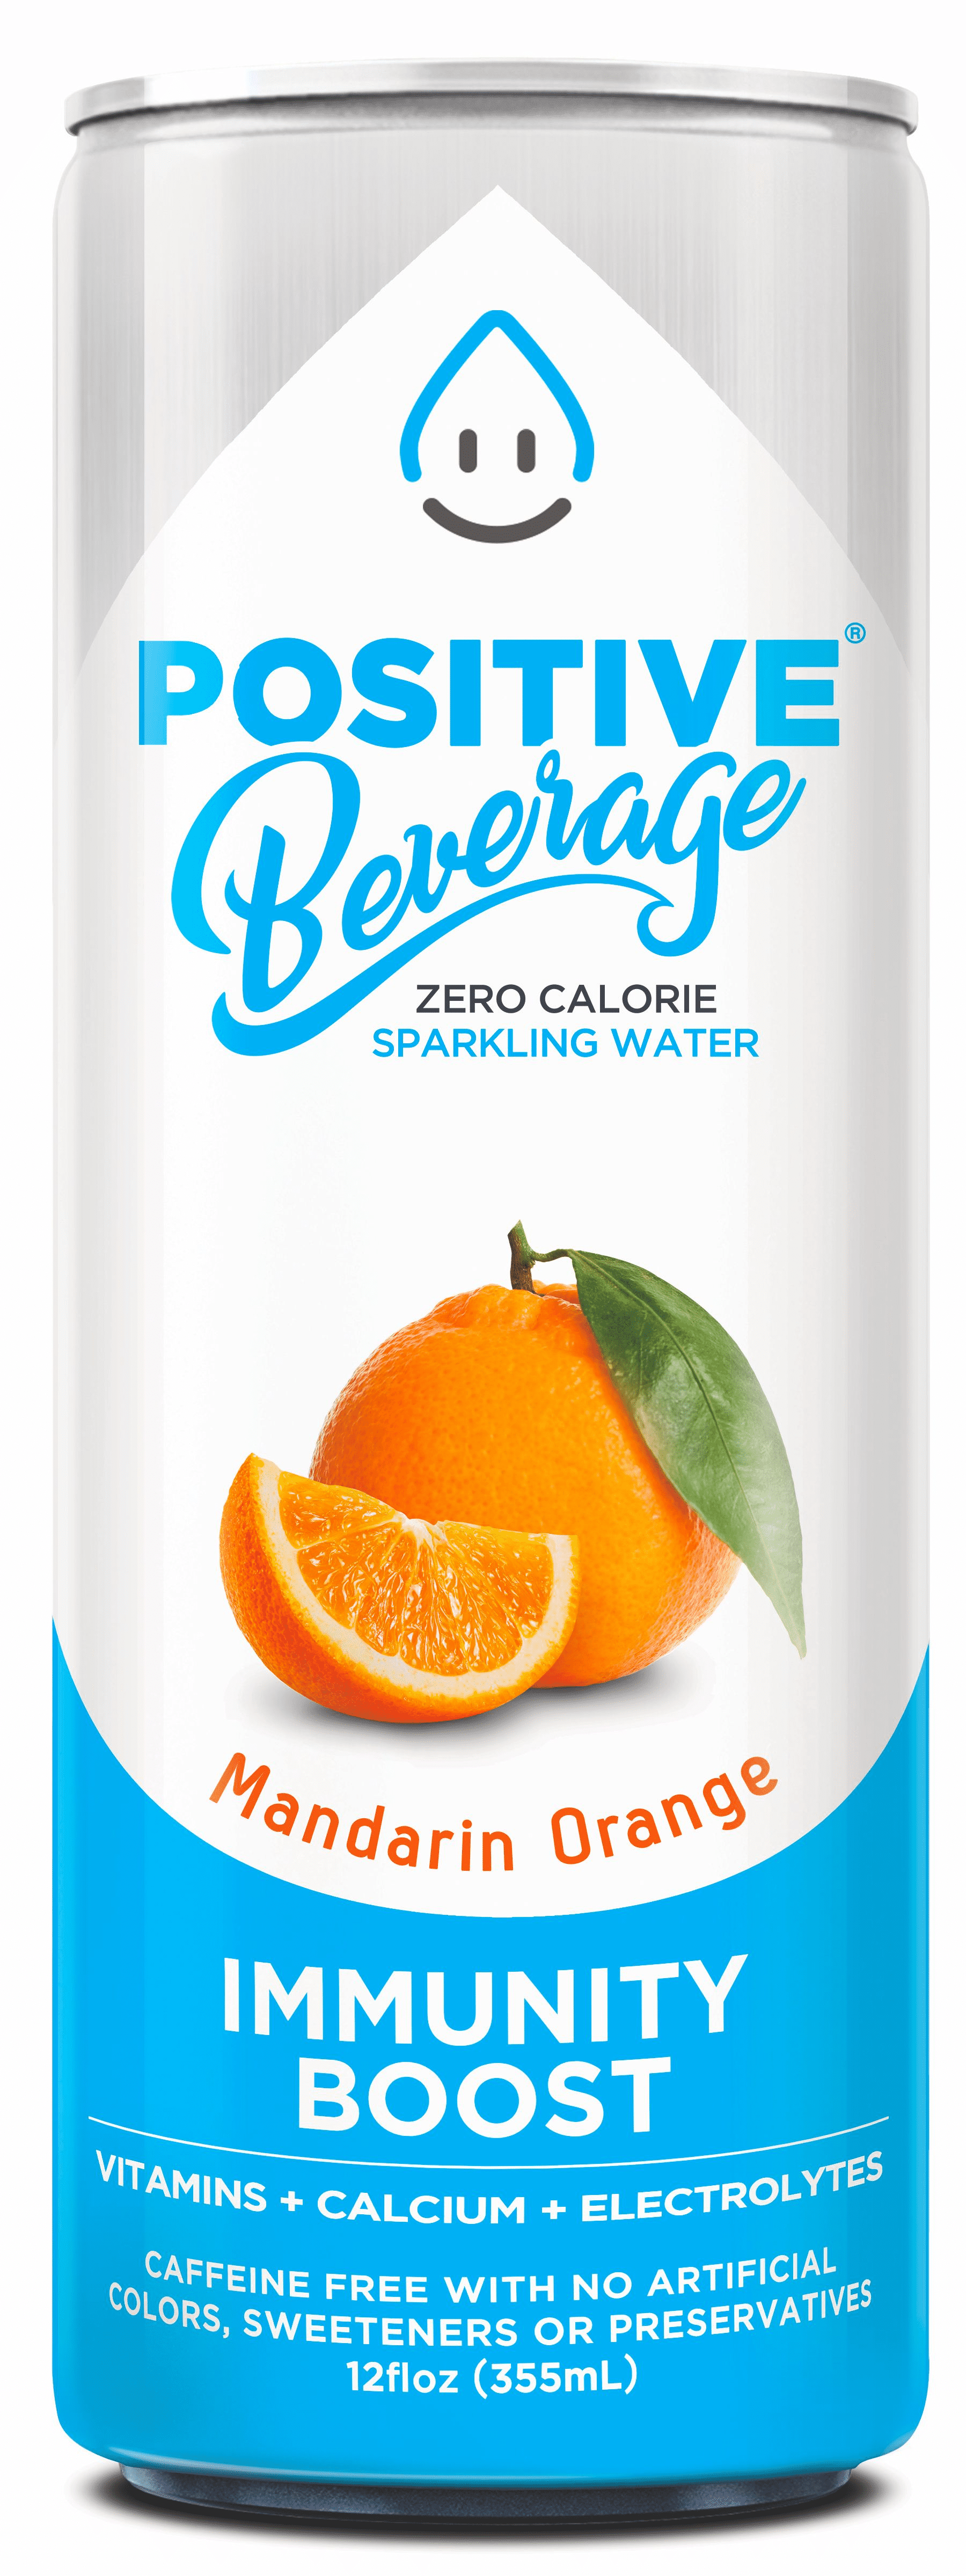 Positive Beverage Mandarin Orange 12 units per case 12.0 fl